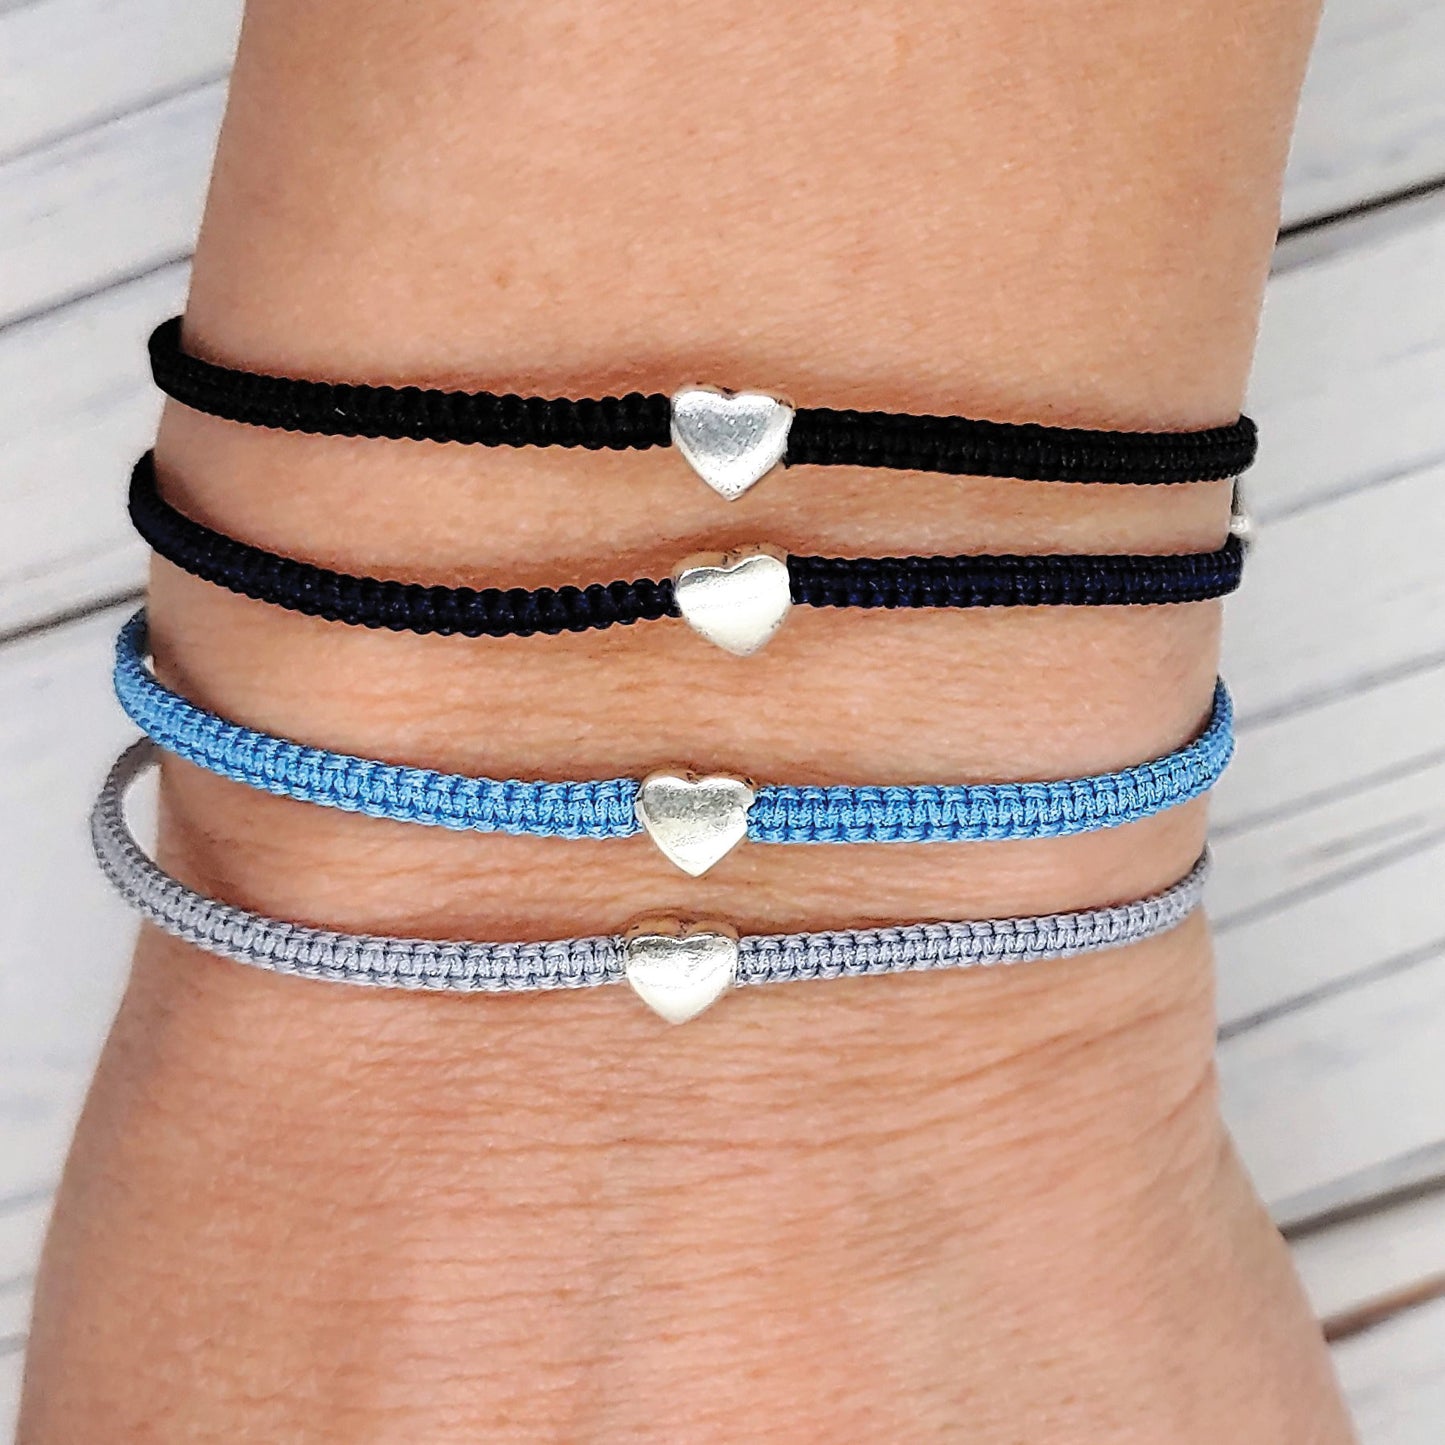 Sterling Silver Solid Heart Bracelet ‖ Adjustable Friendship Bracelet ‖ 925 Heart Macrame' Bracelets